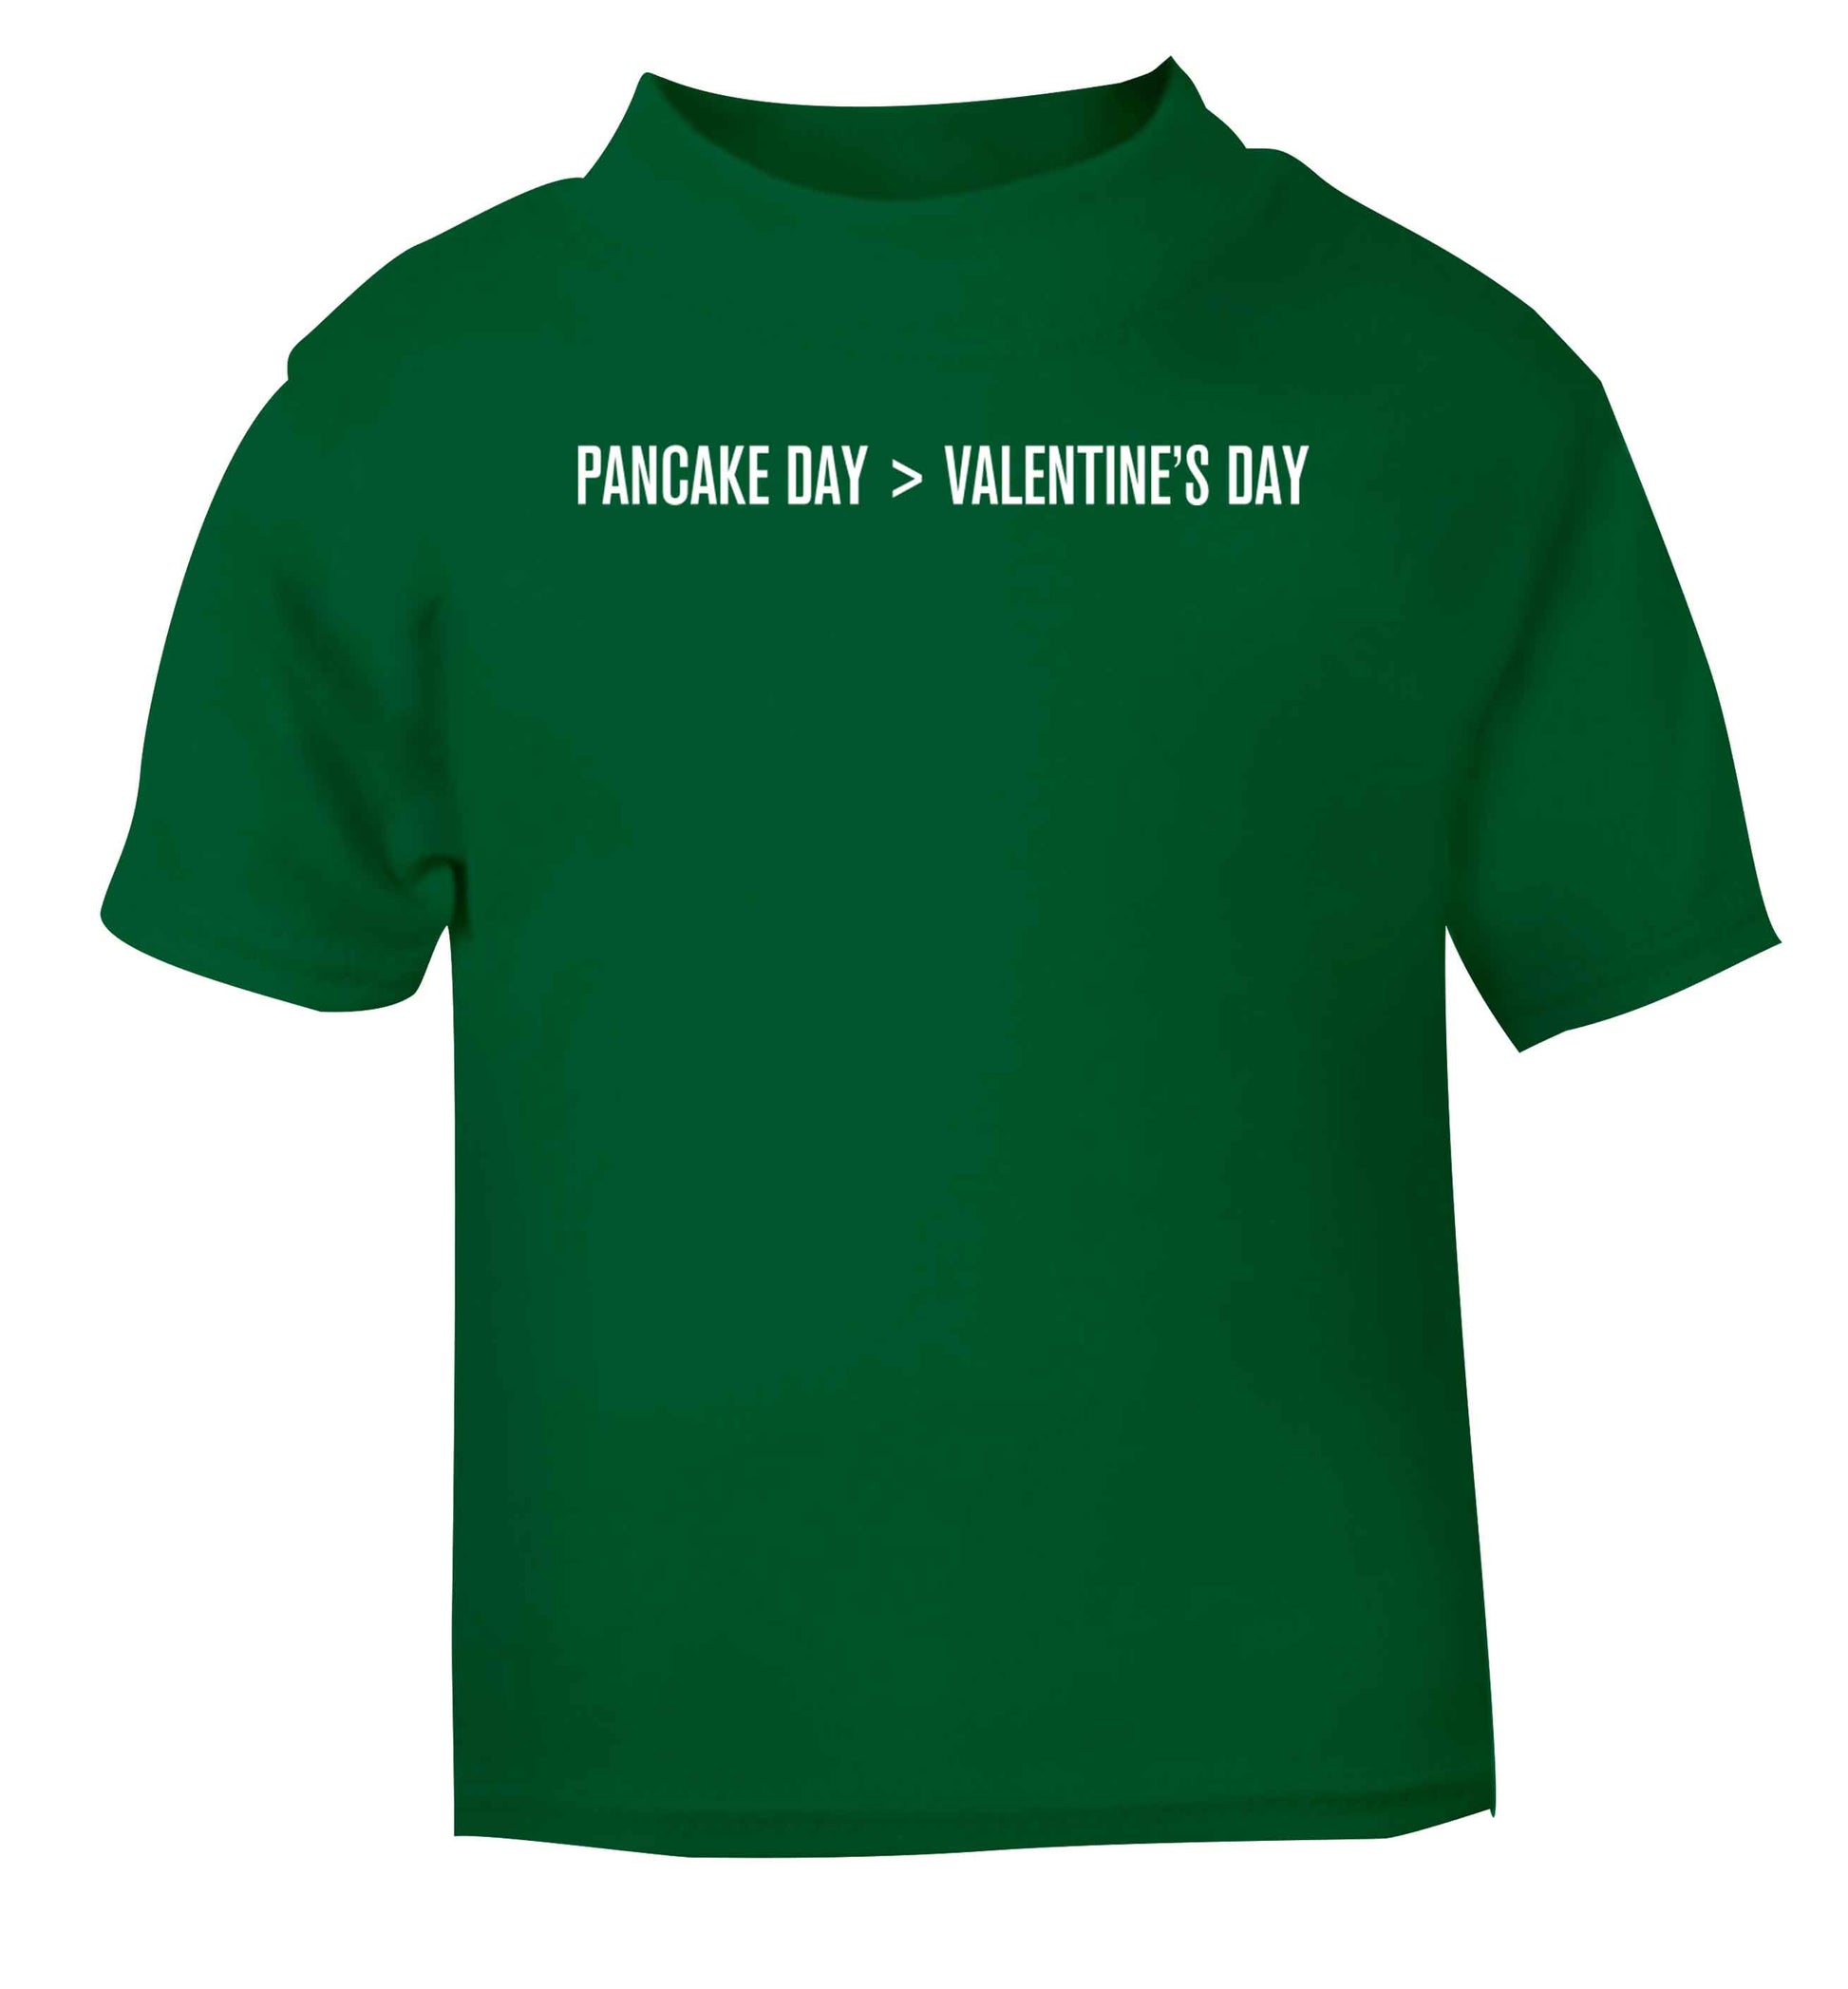 Pancake day > valentines day green baby toddler Tshirt 2 Years